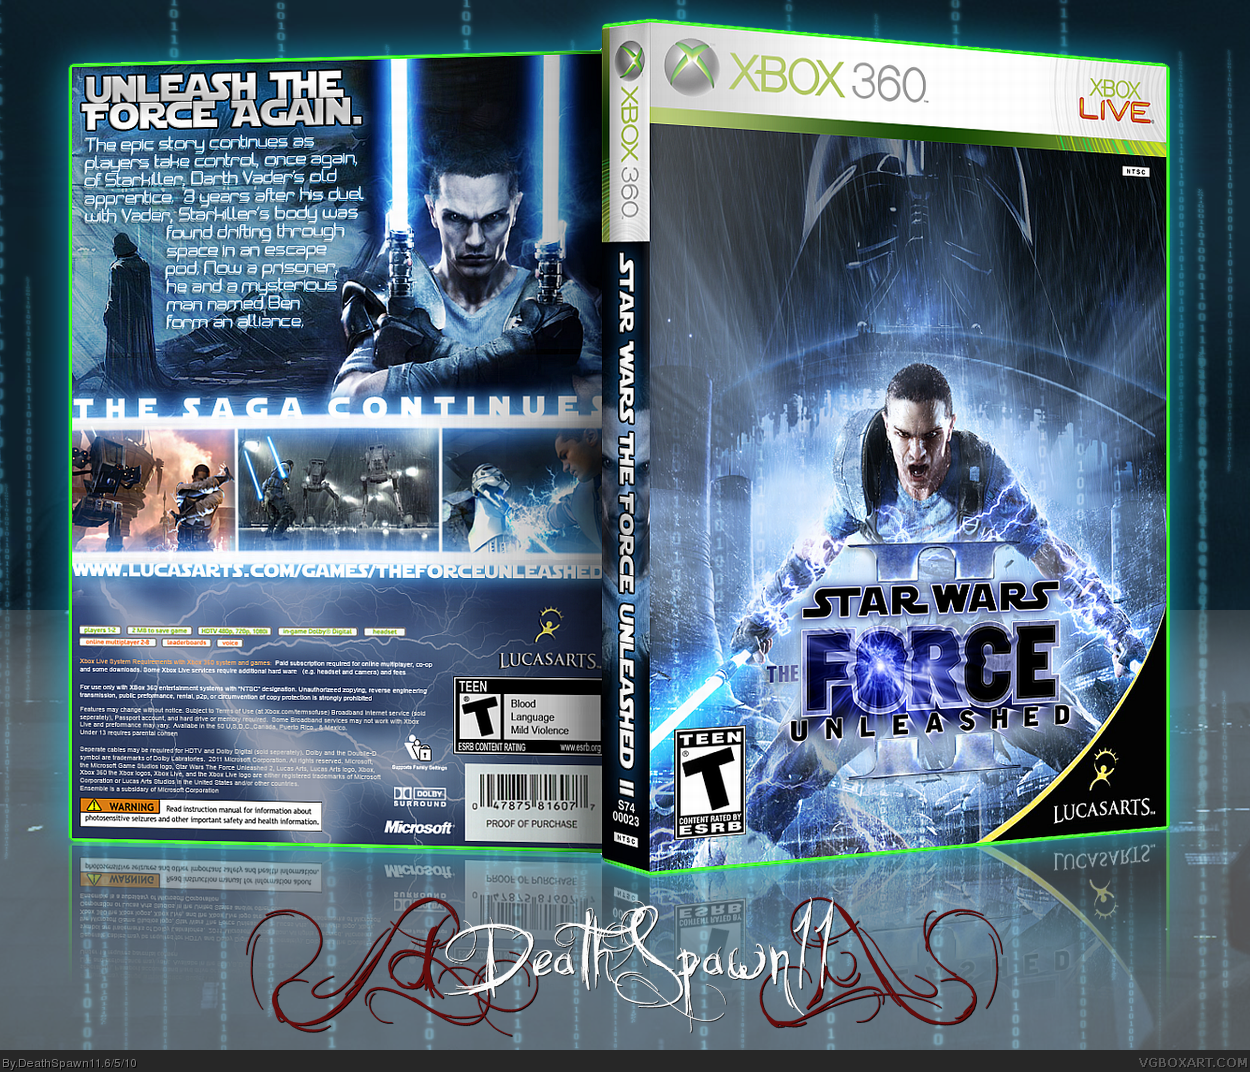 Star Wars обложка Xbox 360. Star Wars the Force unleashed Xbox 360. Star Wars the Force unleashed 2 Xbox 360. The Force unleashed Xbox.